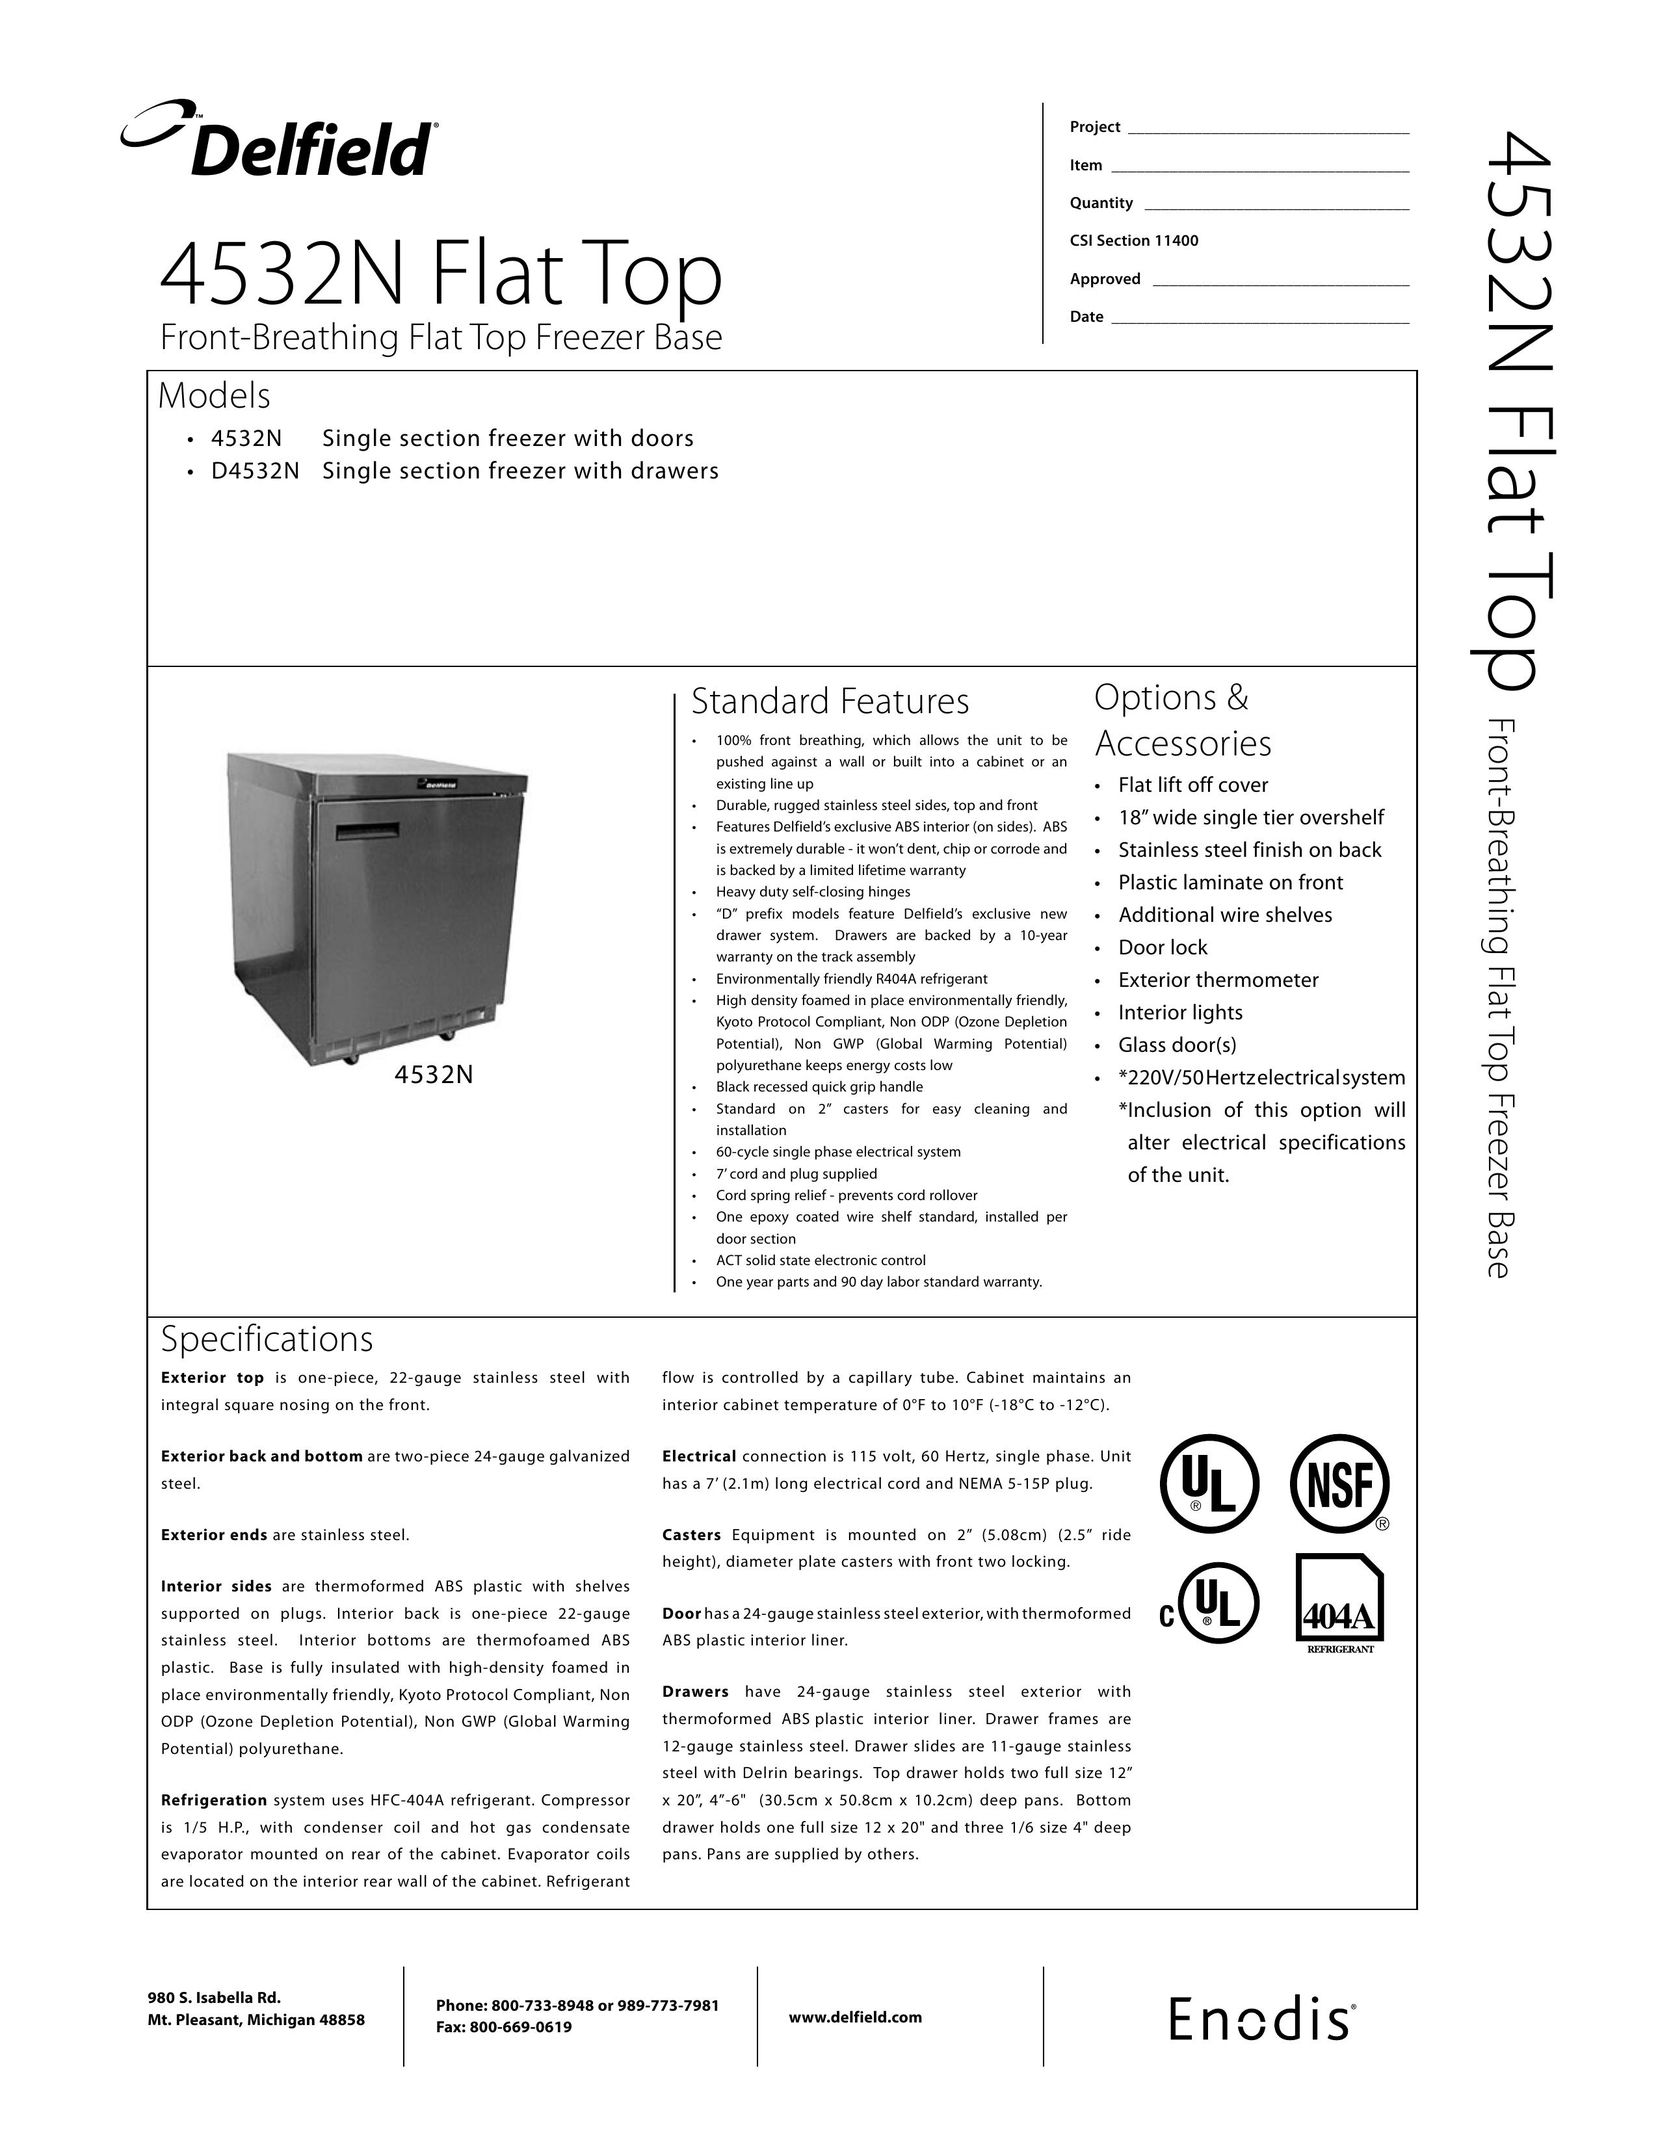 Delfield 4532N Freezer User Manual